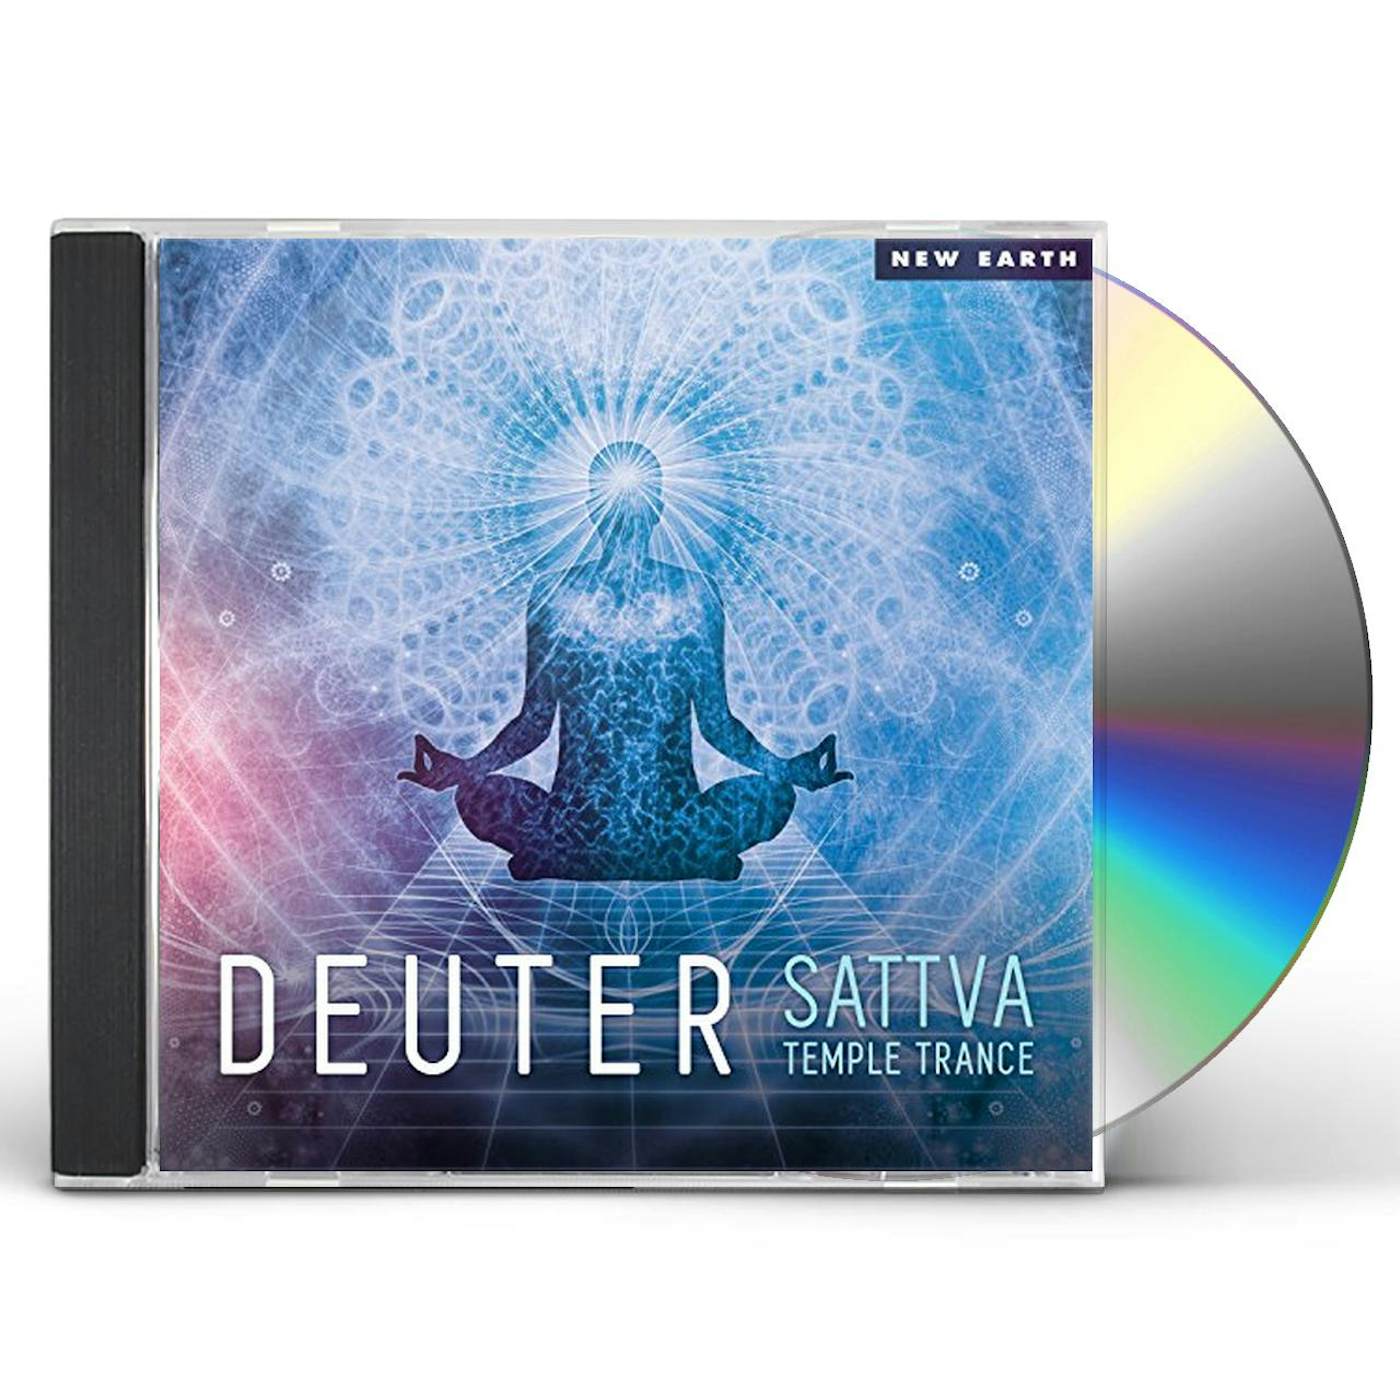 Deuter SATTVA TEMPLE TRANCE CD